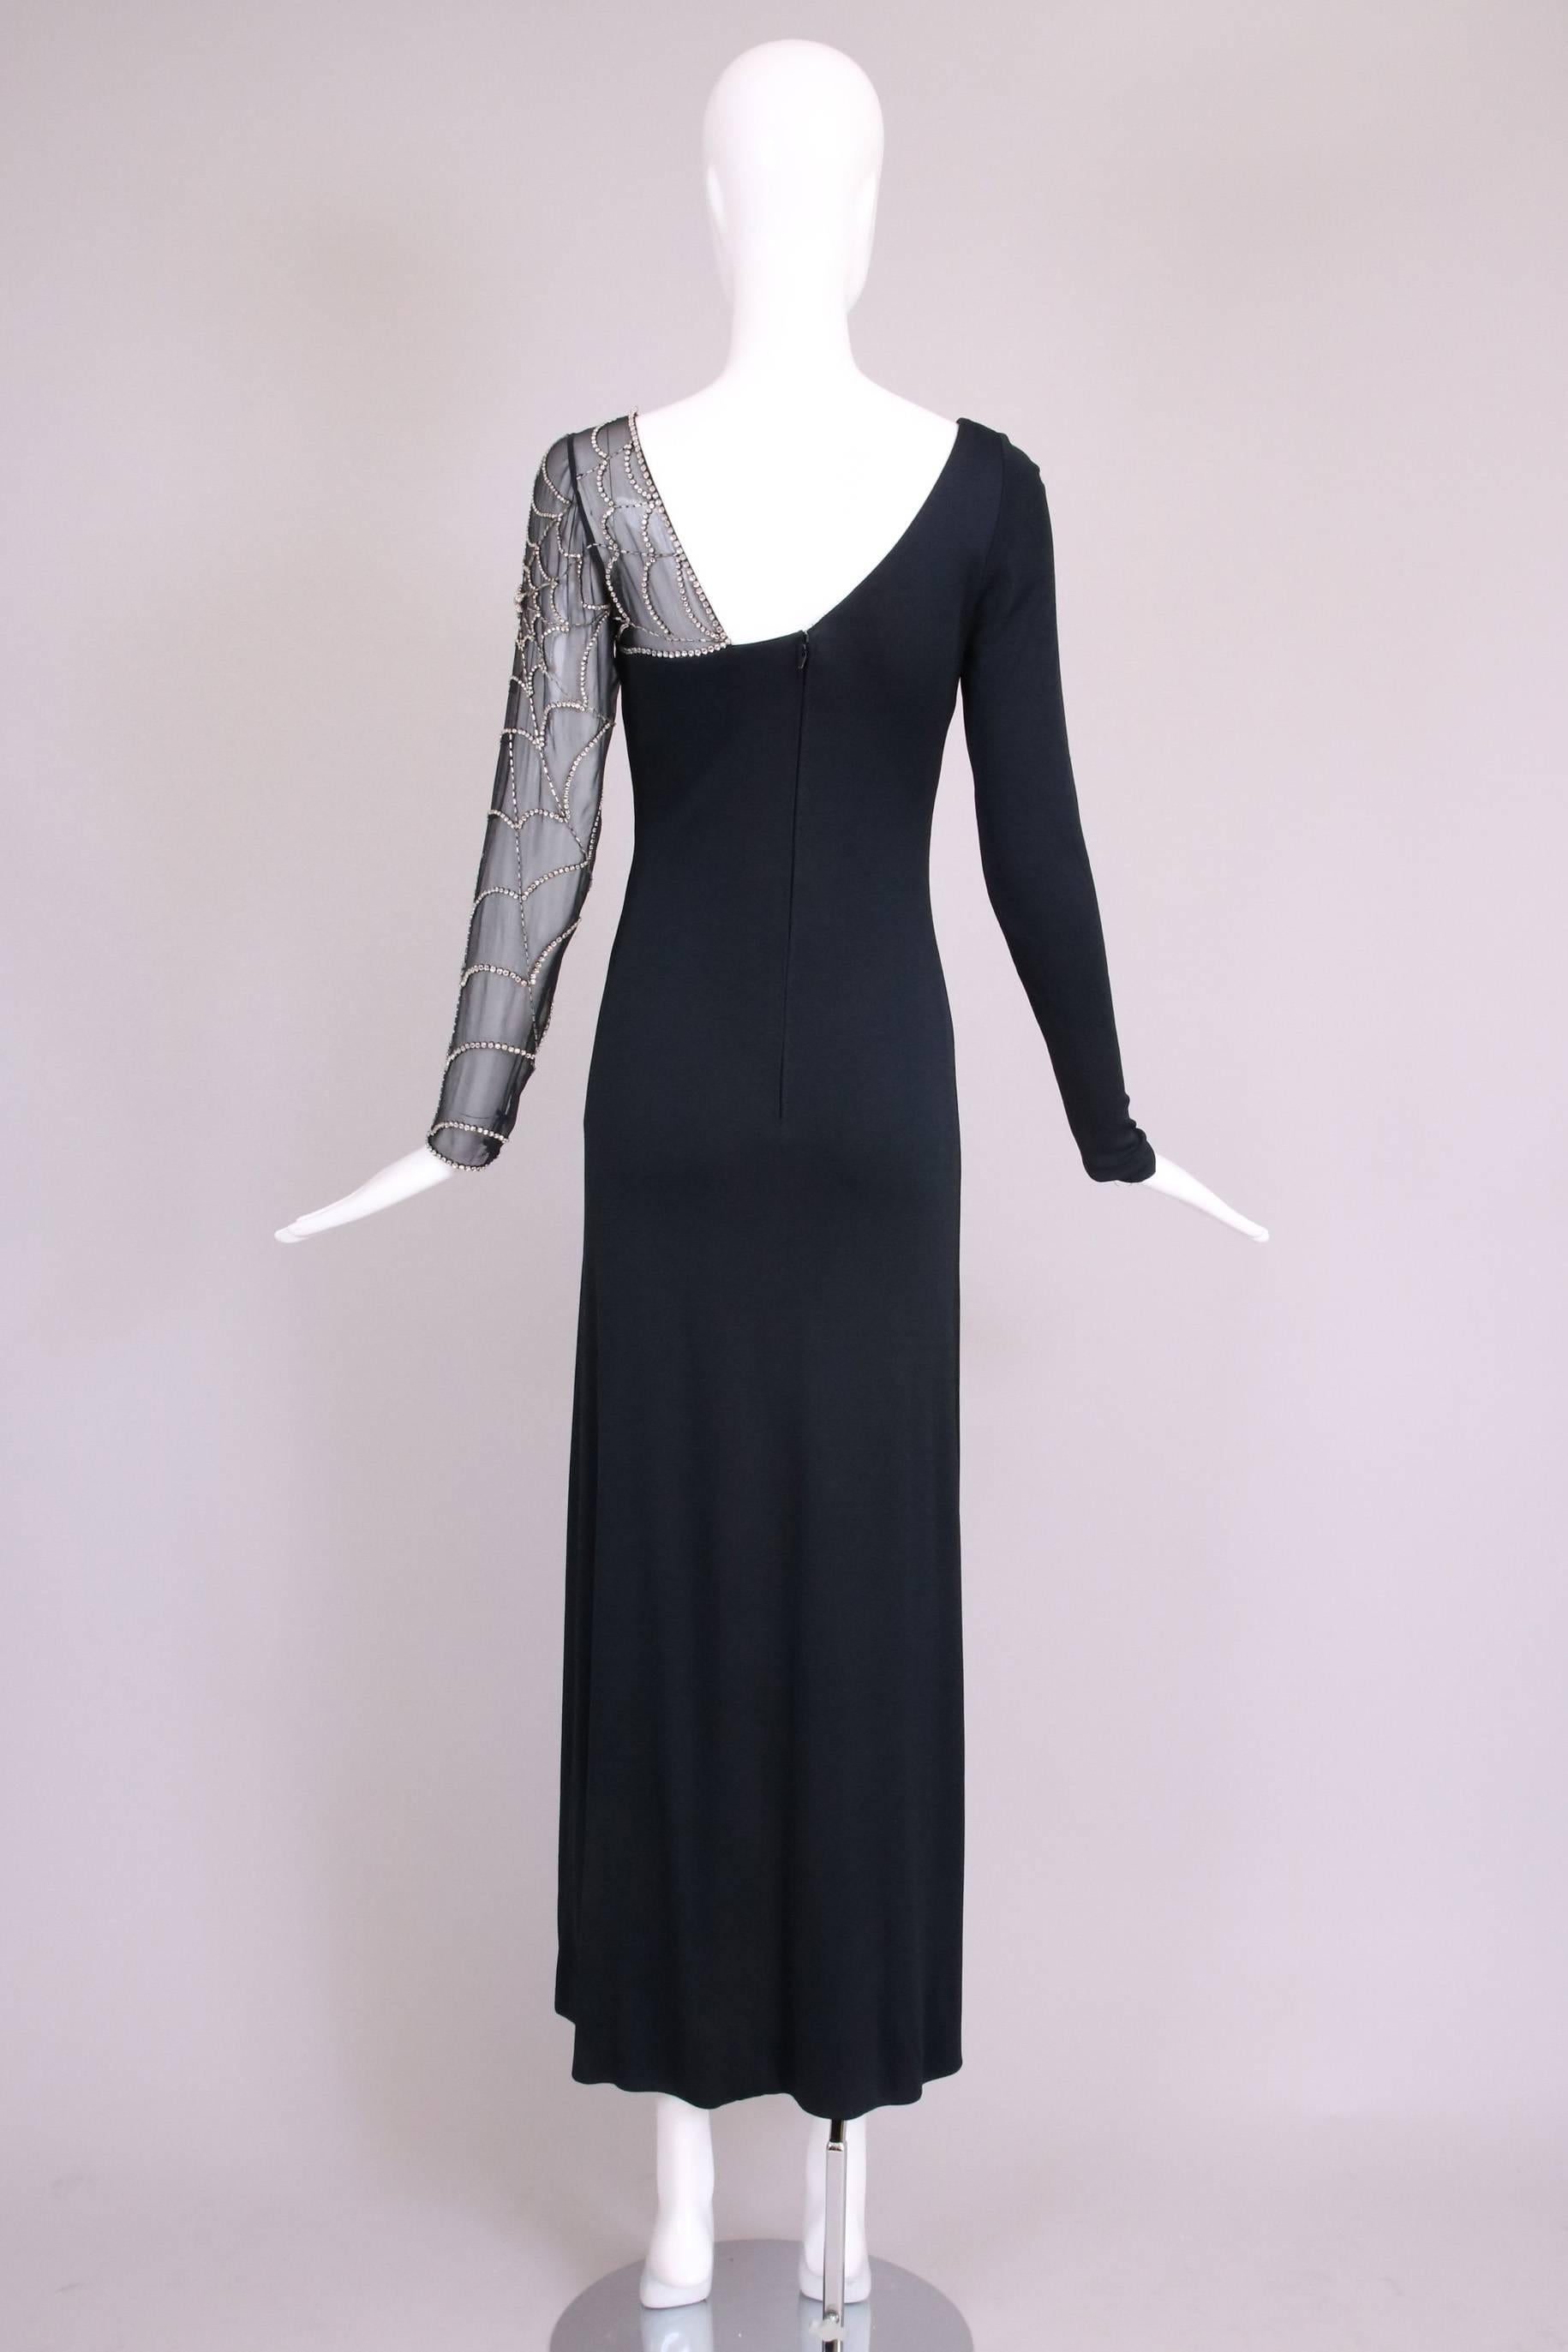 Women's Mollie Parnis Black Silk Jersey Evening Dress Gown w/Beaded Spiderweb Sleeves